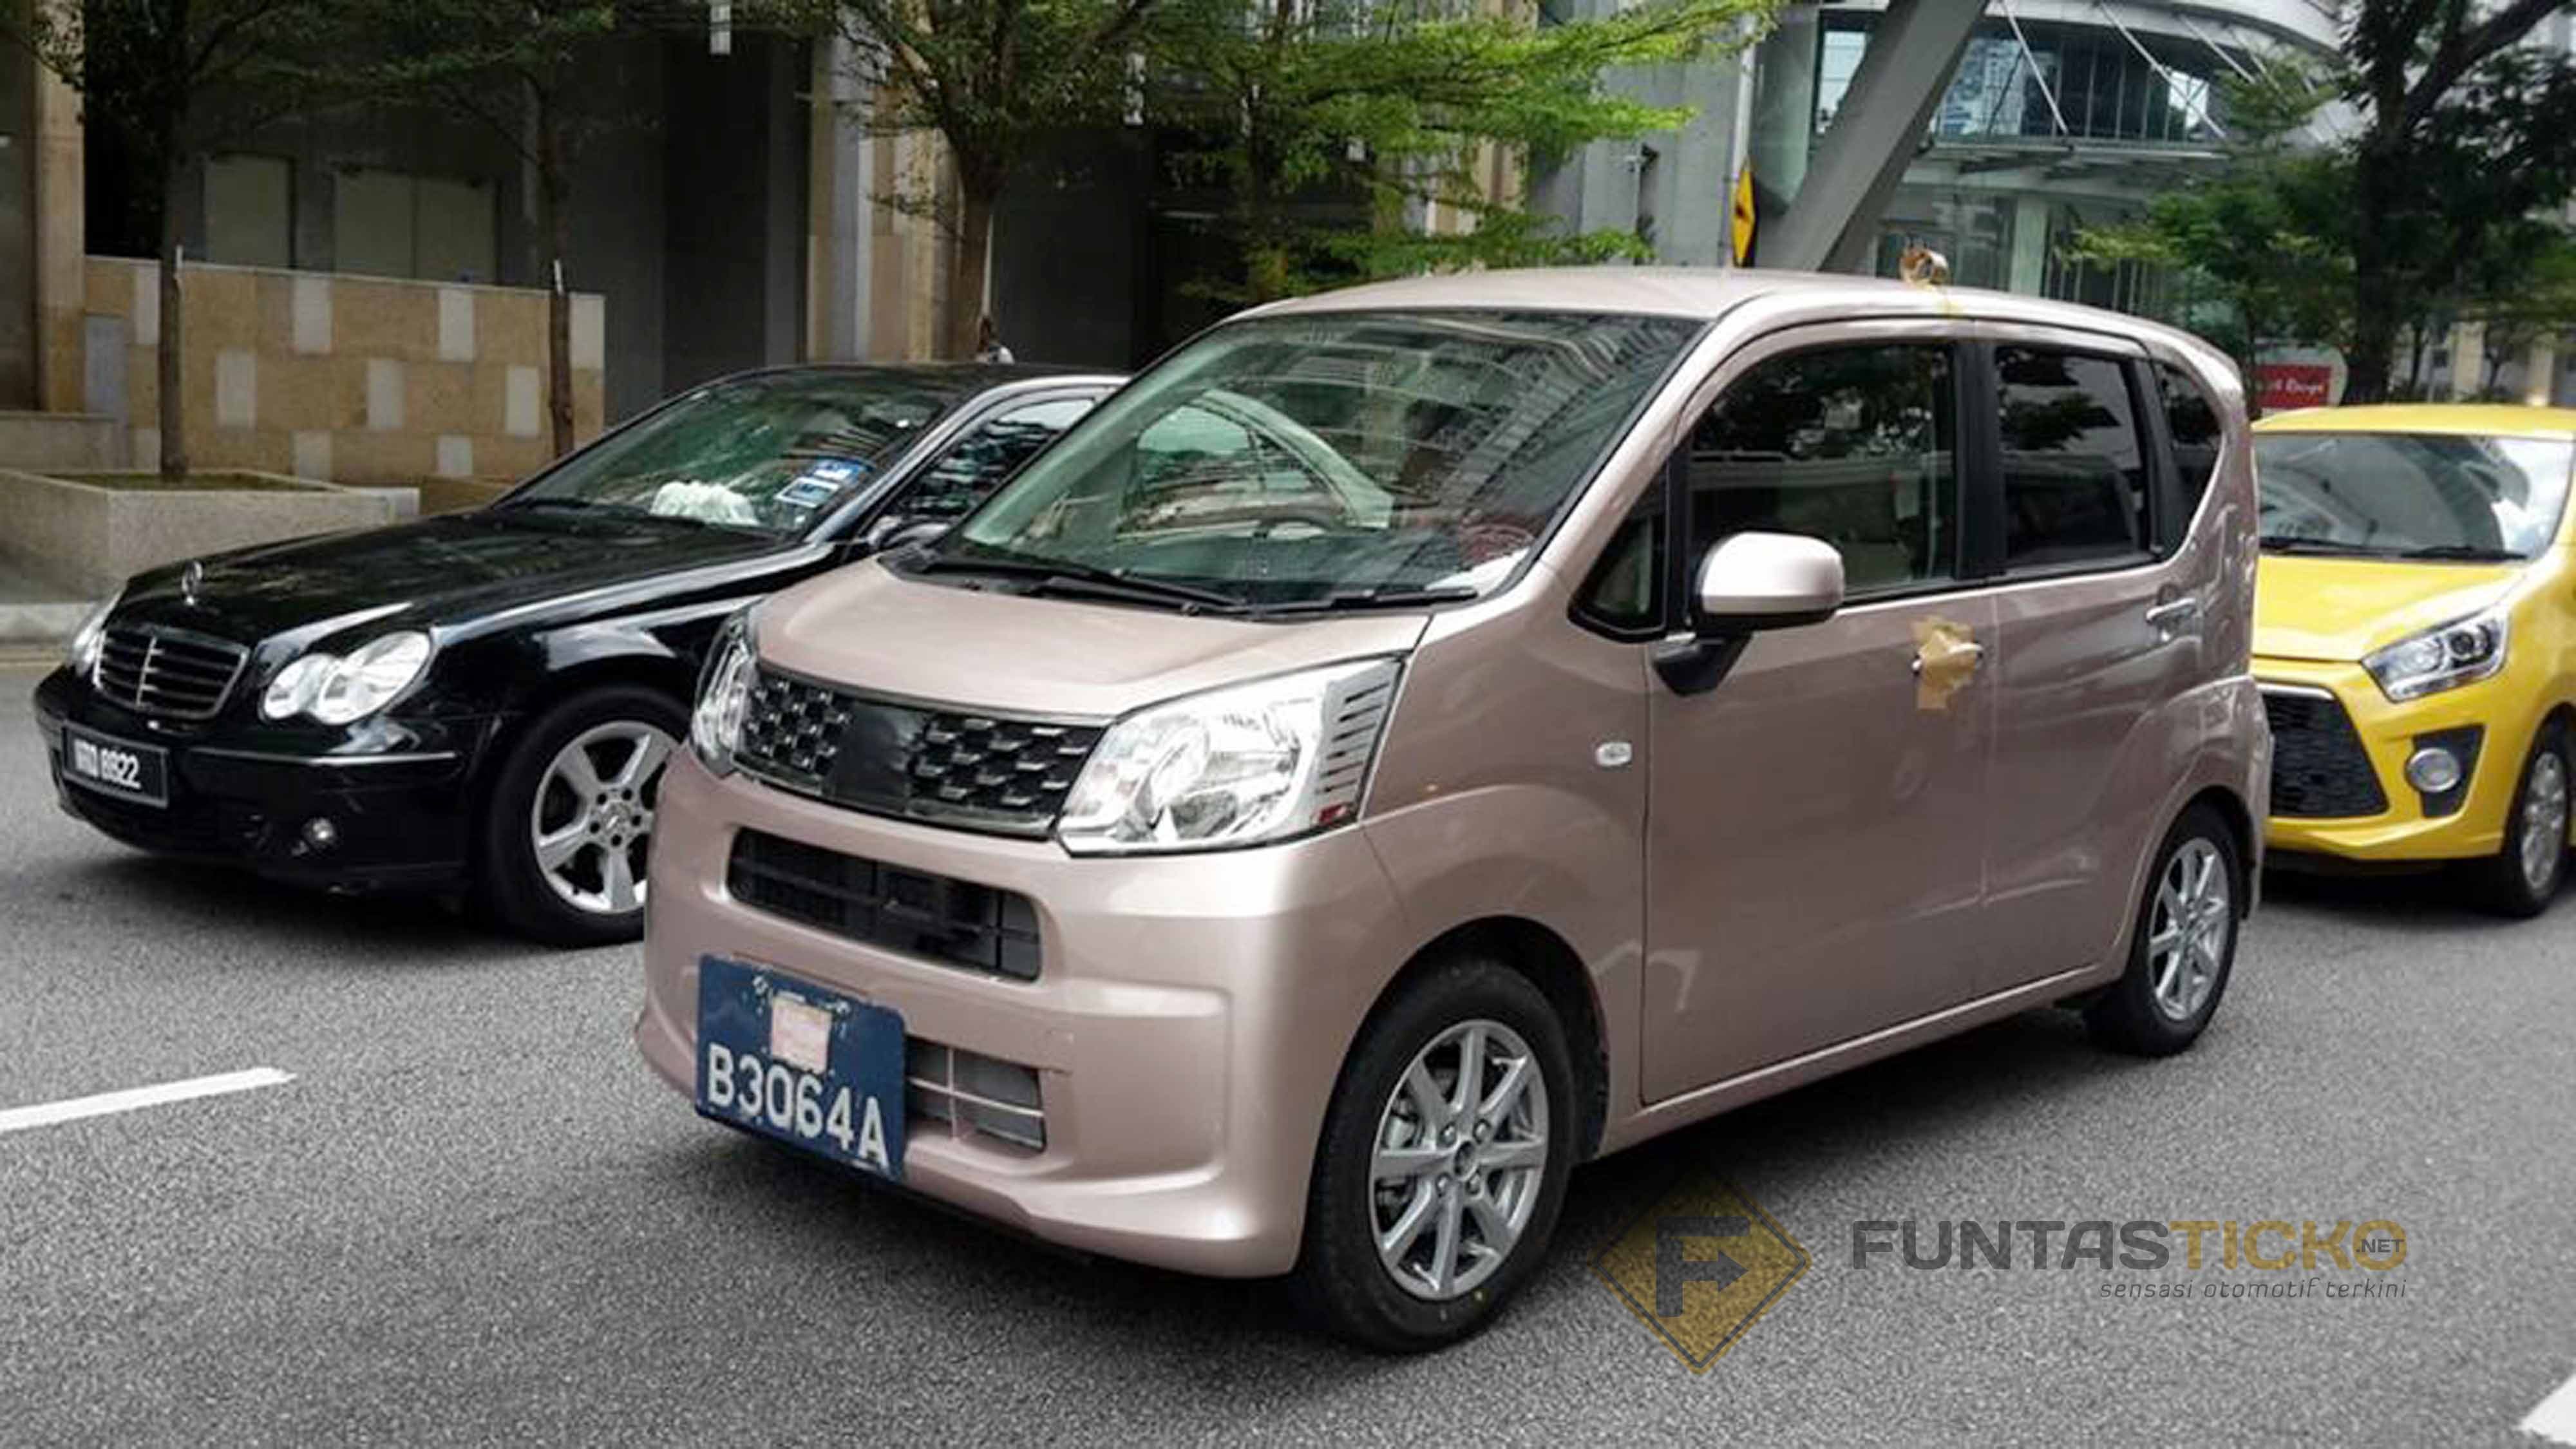 Daihatsu Move spied in Malaysia, previews upcoming Perodua 